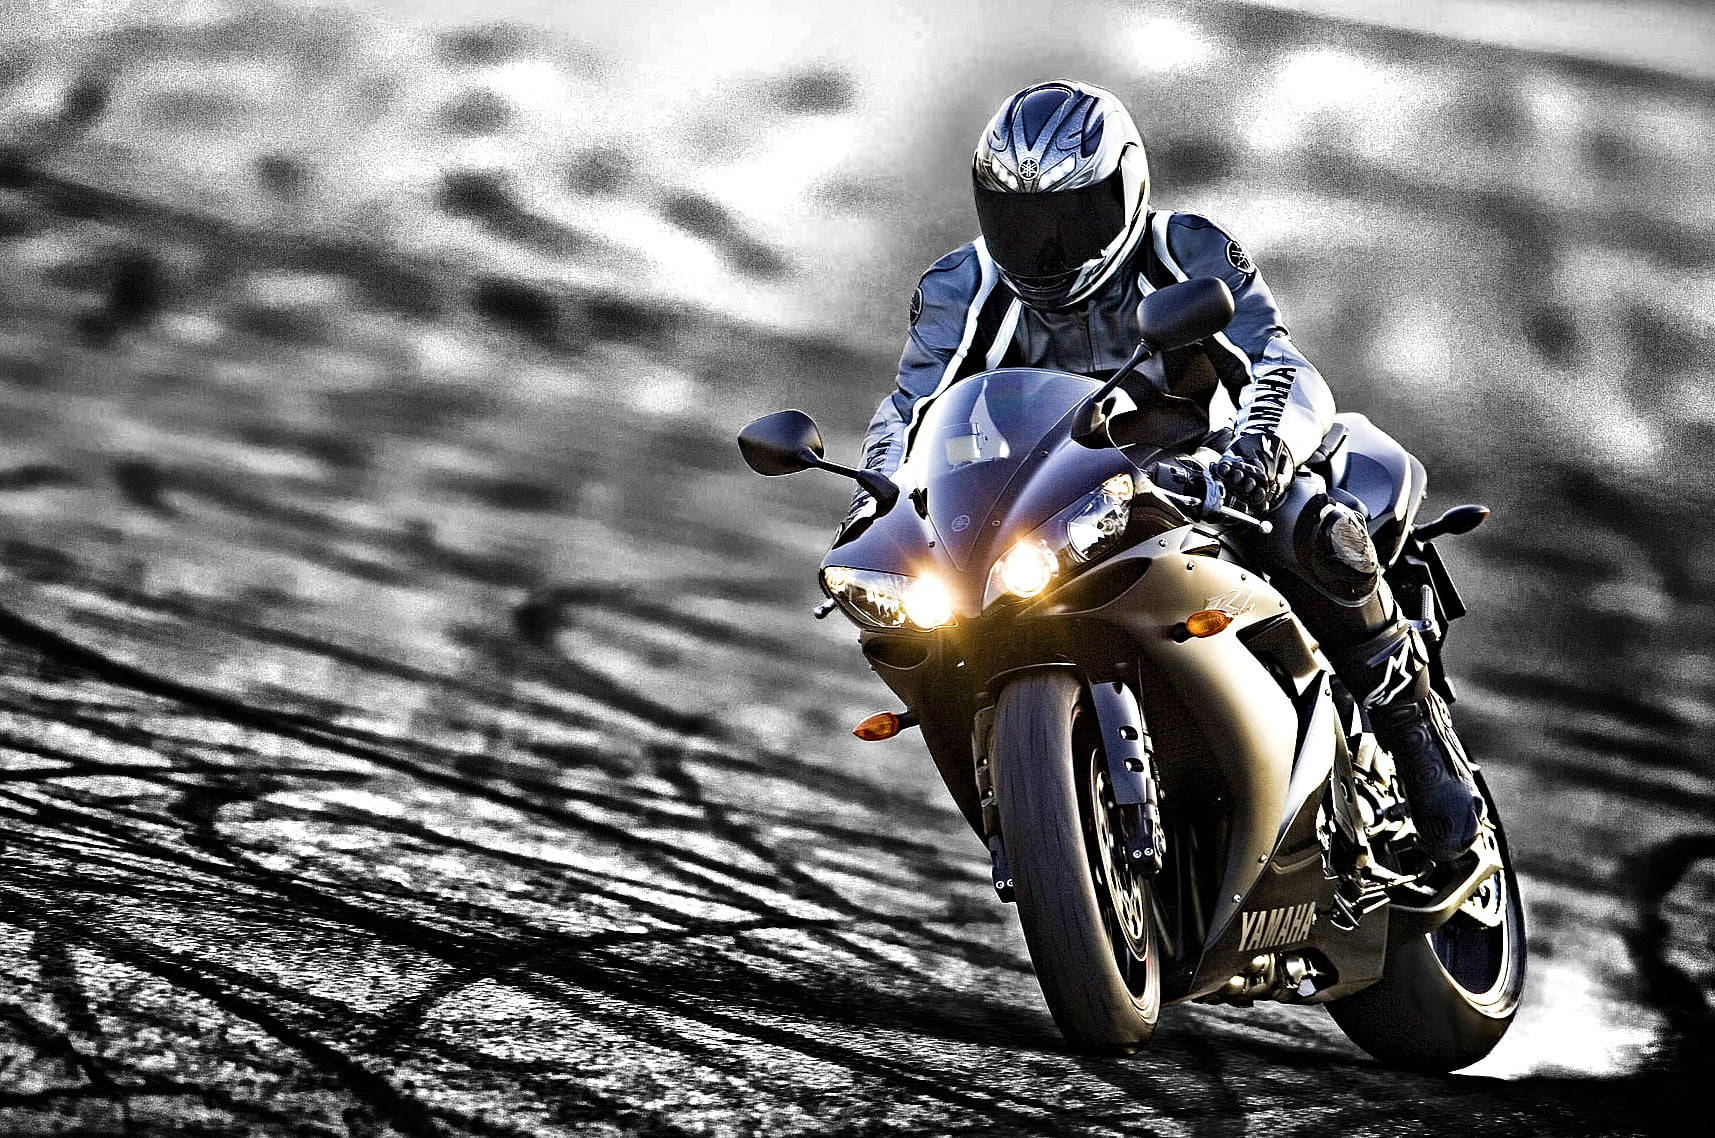 Motocicletaktm Rc 390 Color Plateado. Fondo de pantalla